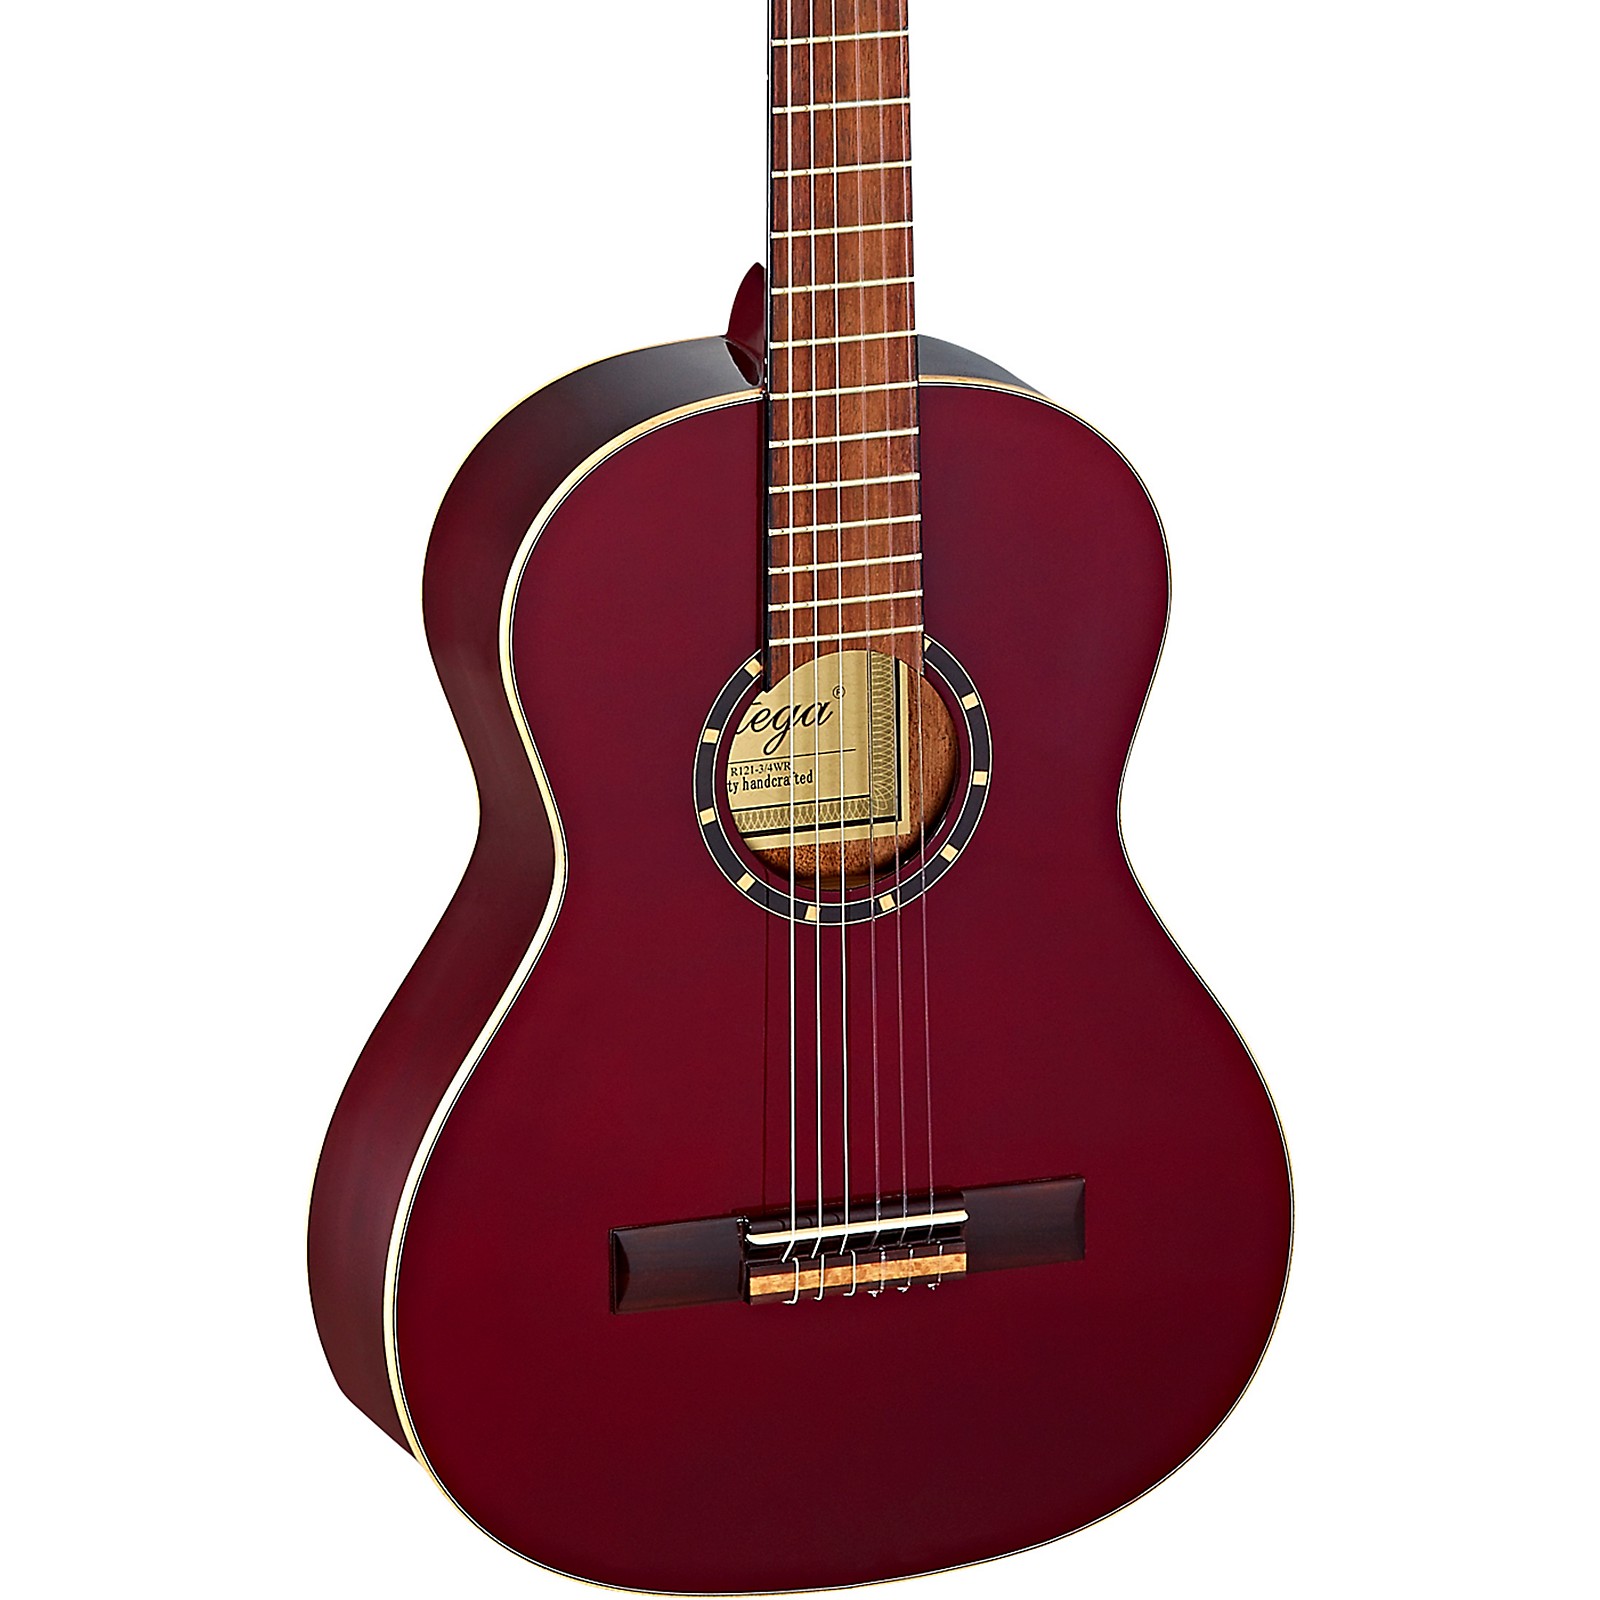 Ortega Family Series R121-3/4WR 3/4 Size Classical Guitar